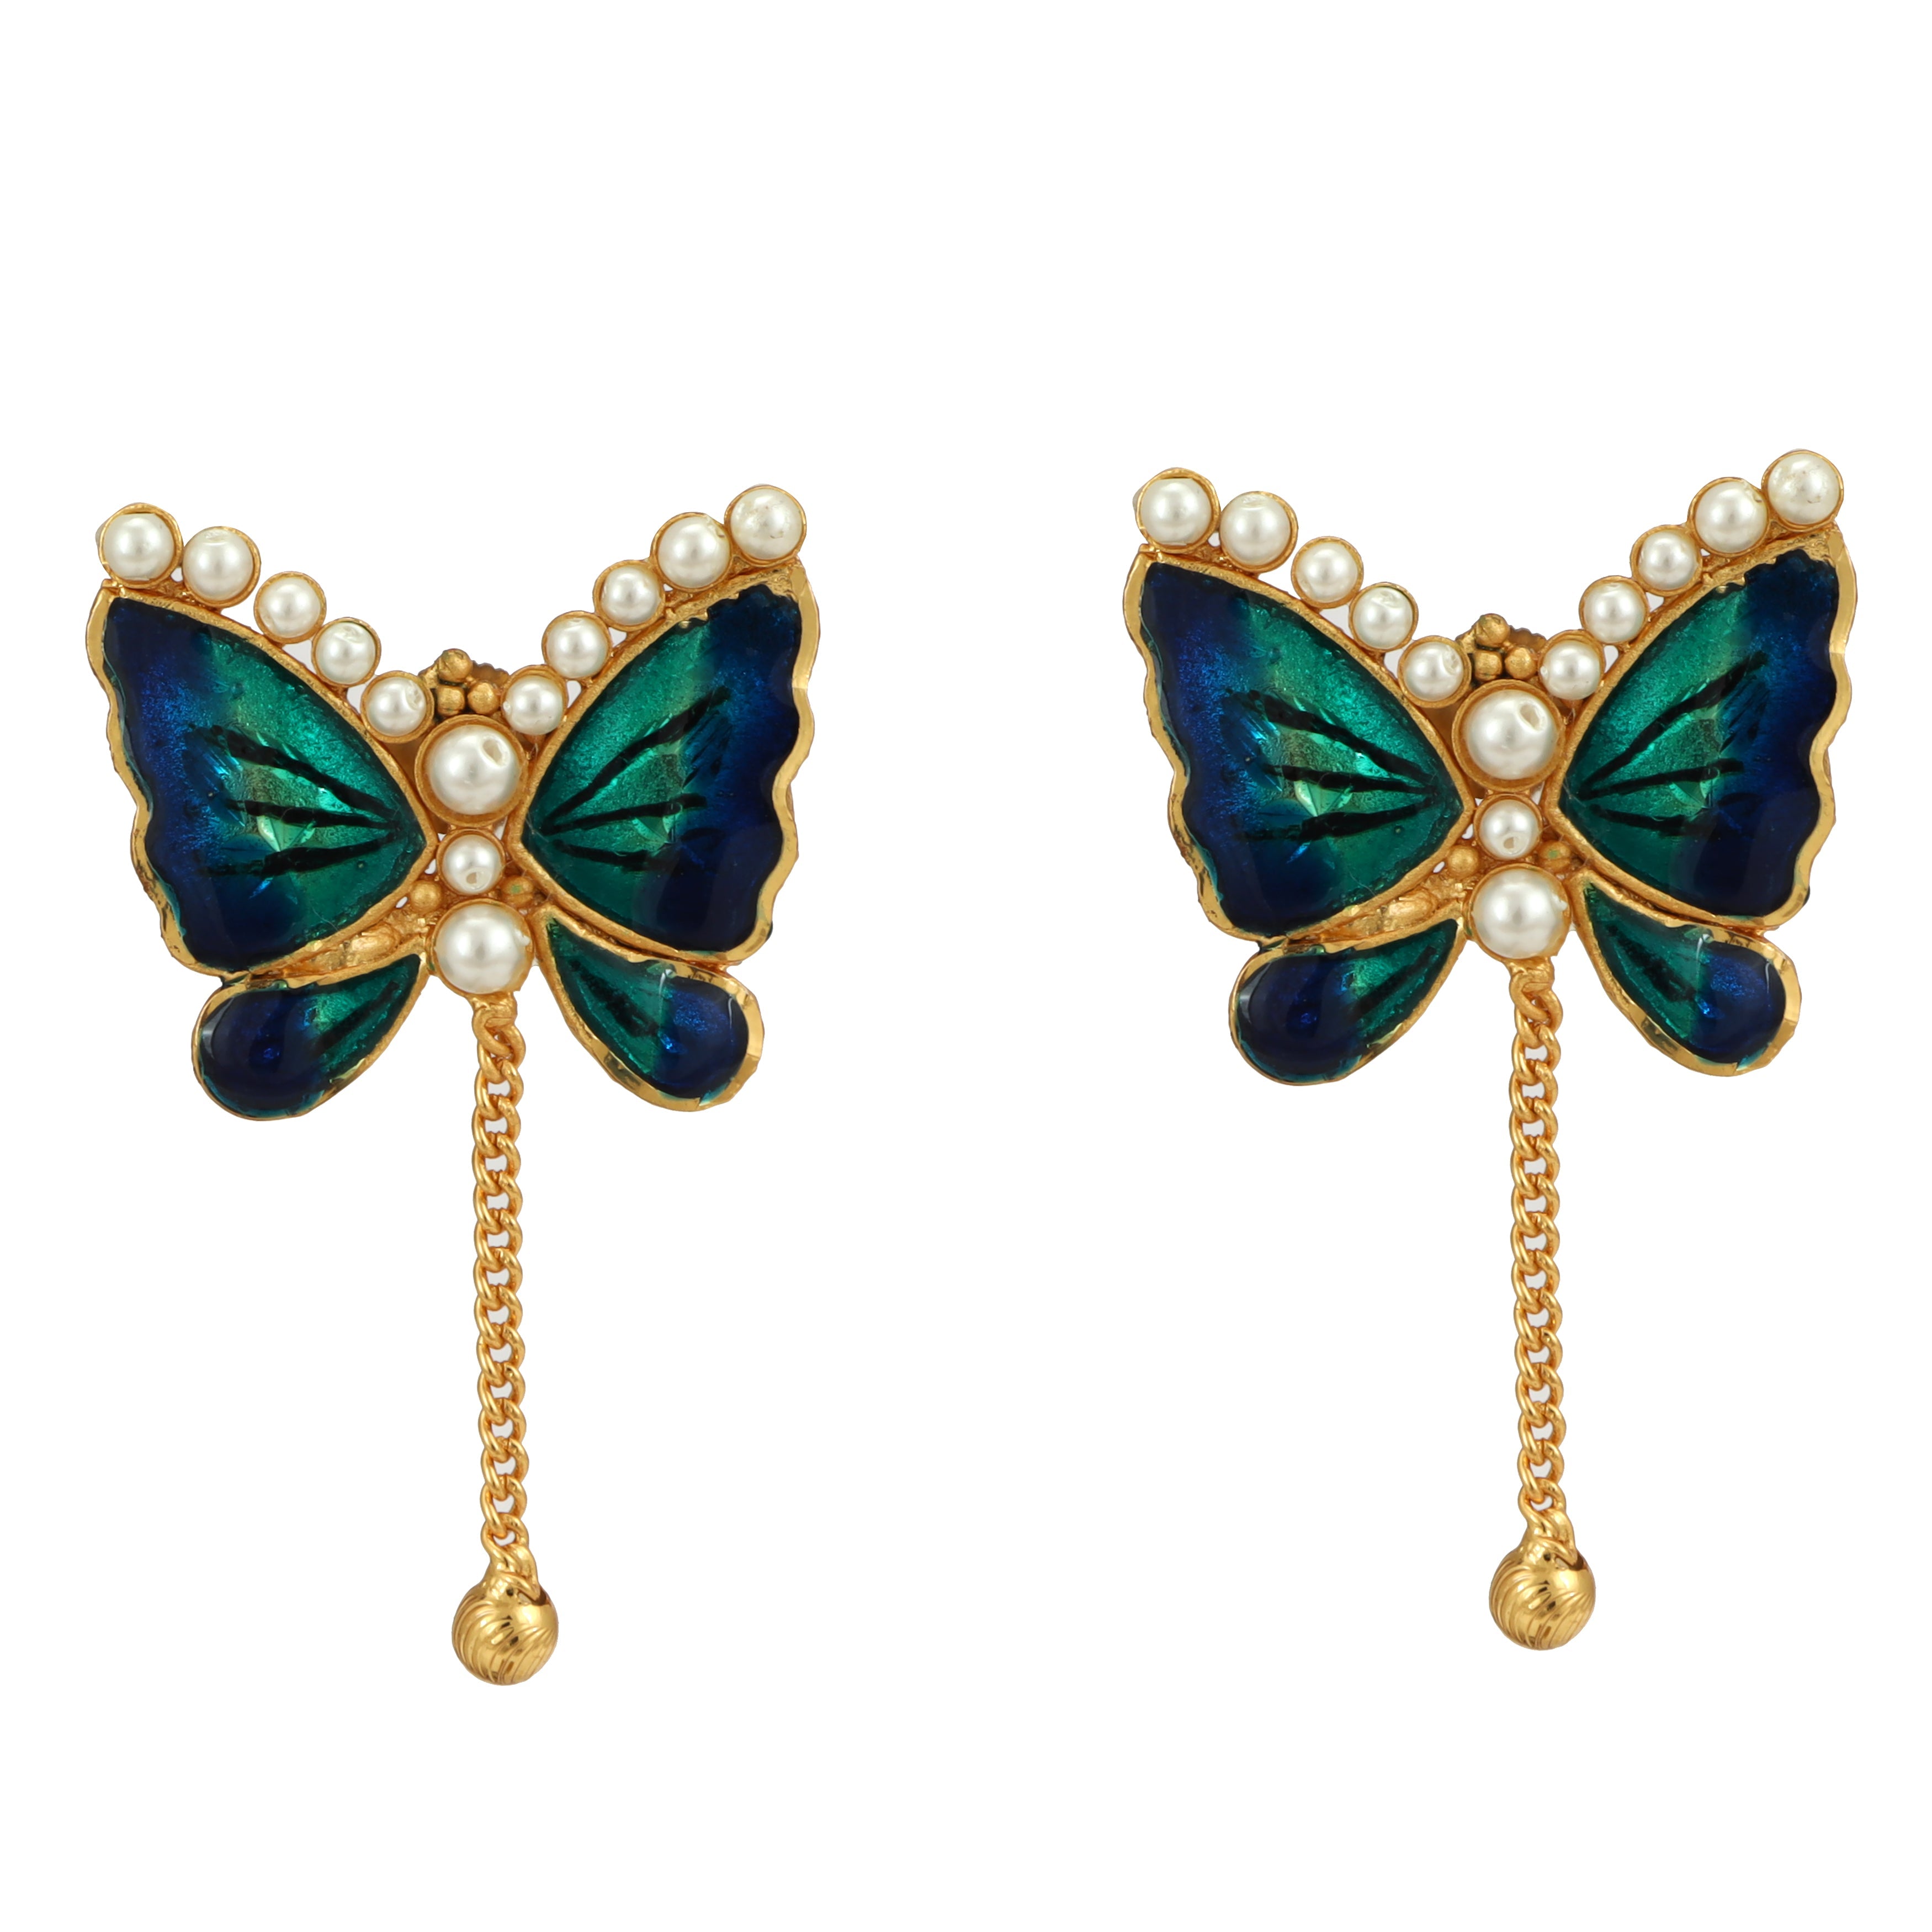 Minakari Butterfly Necklace Set